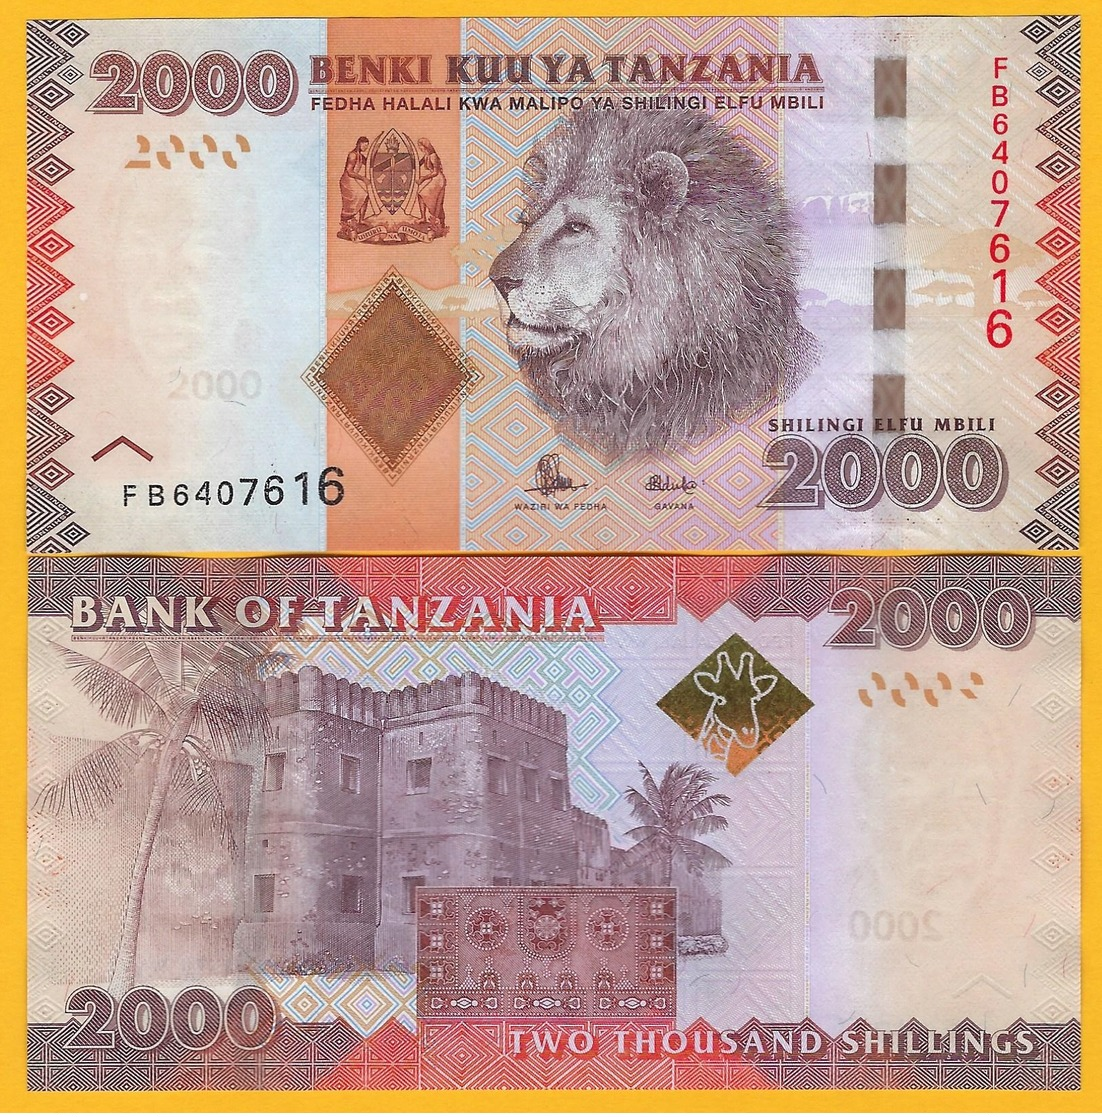 Tanzania 2000 Shillings P-42b 2015 UNC Banknote - Tanzania